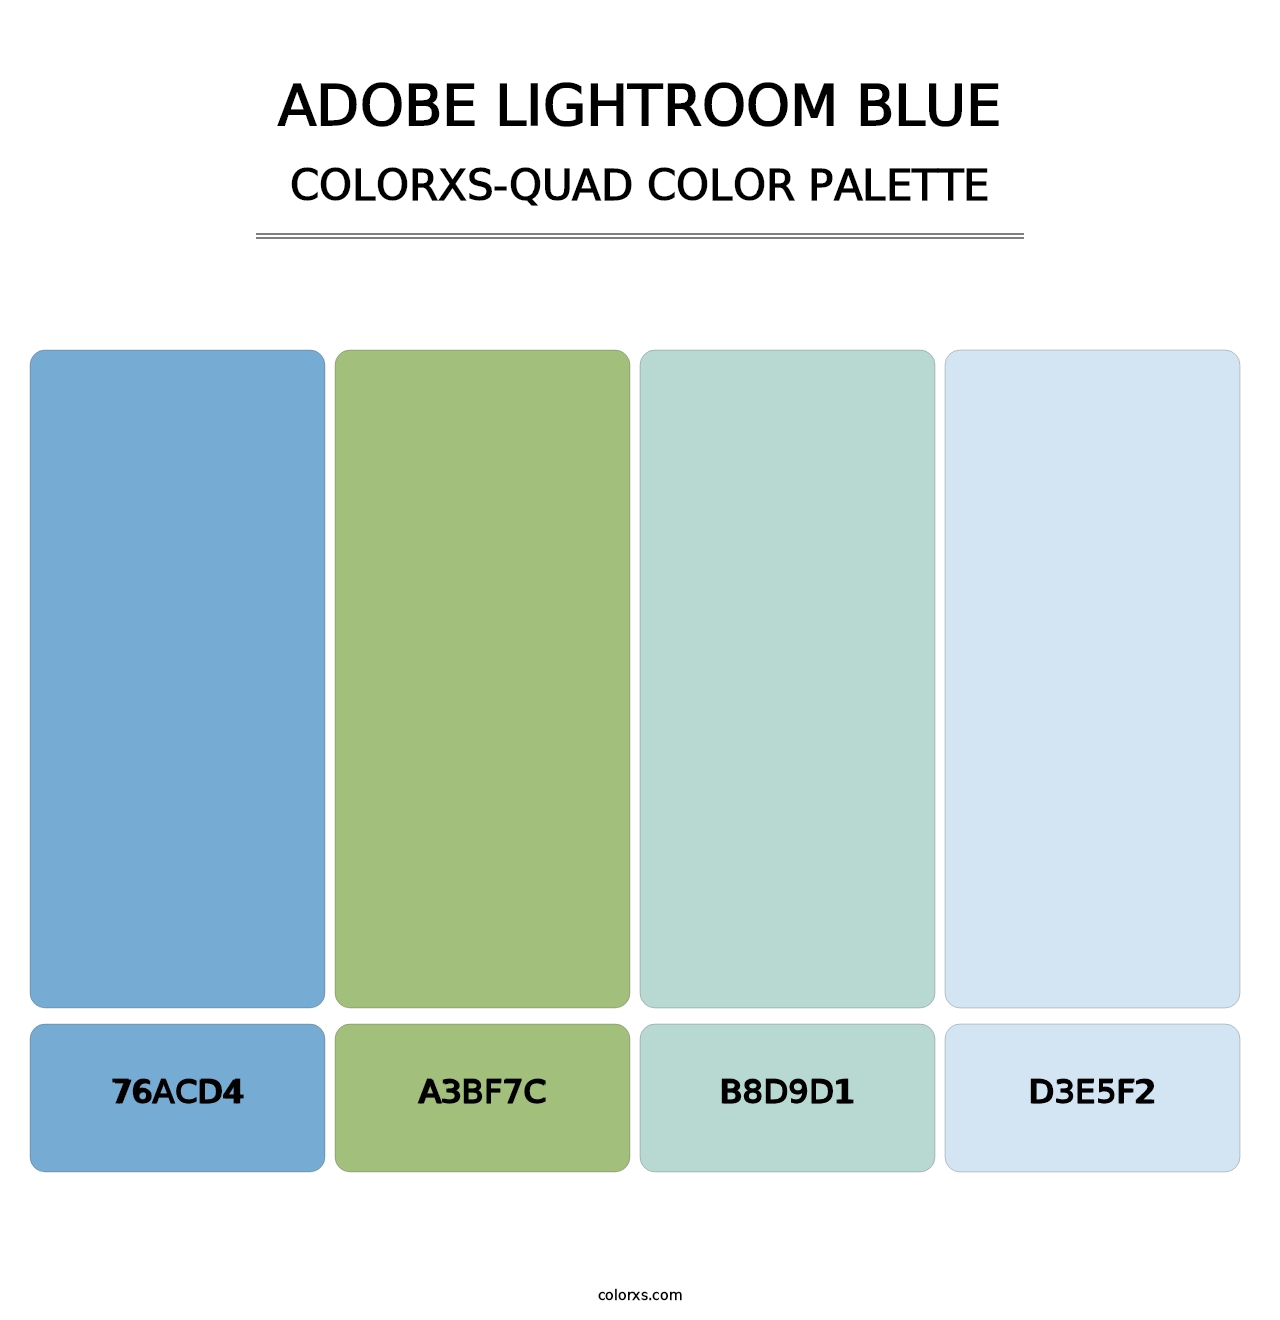 Adobe Lightroom Blue - Colorxs Quad Palette